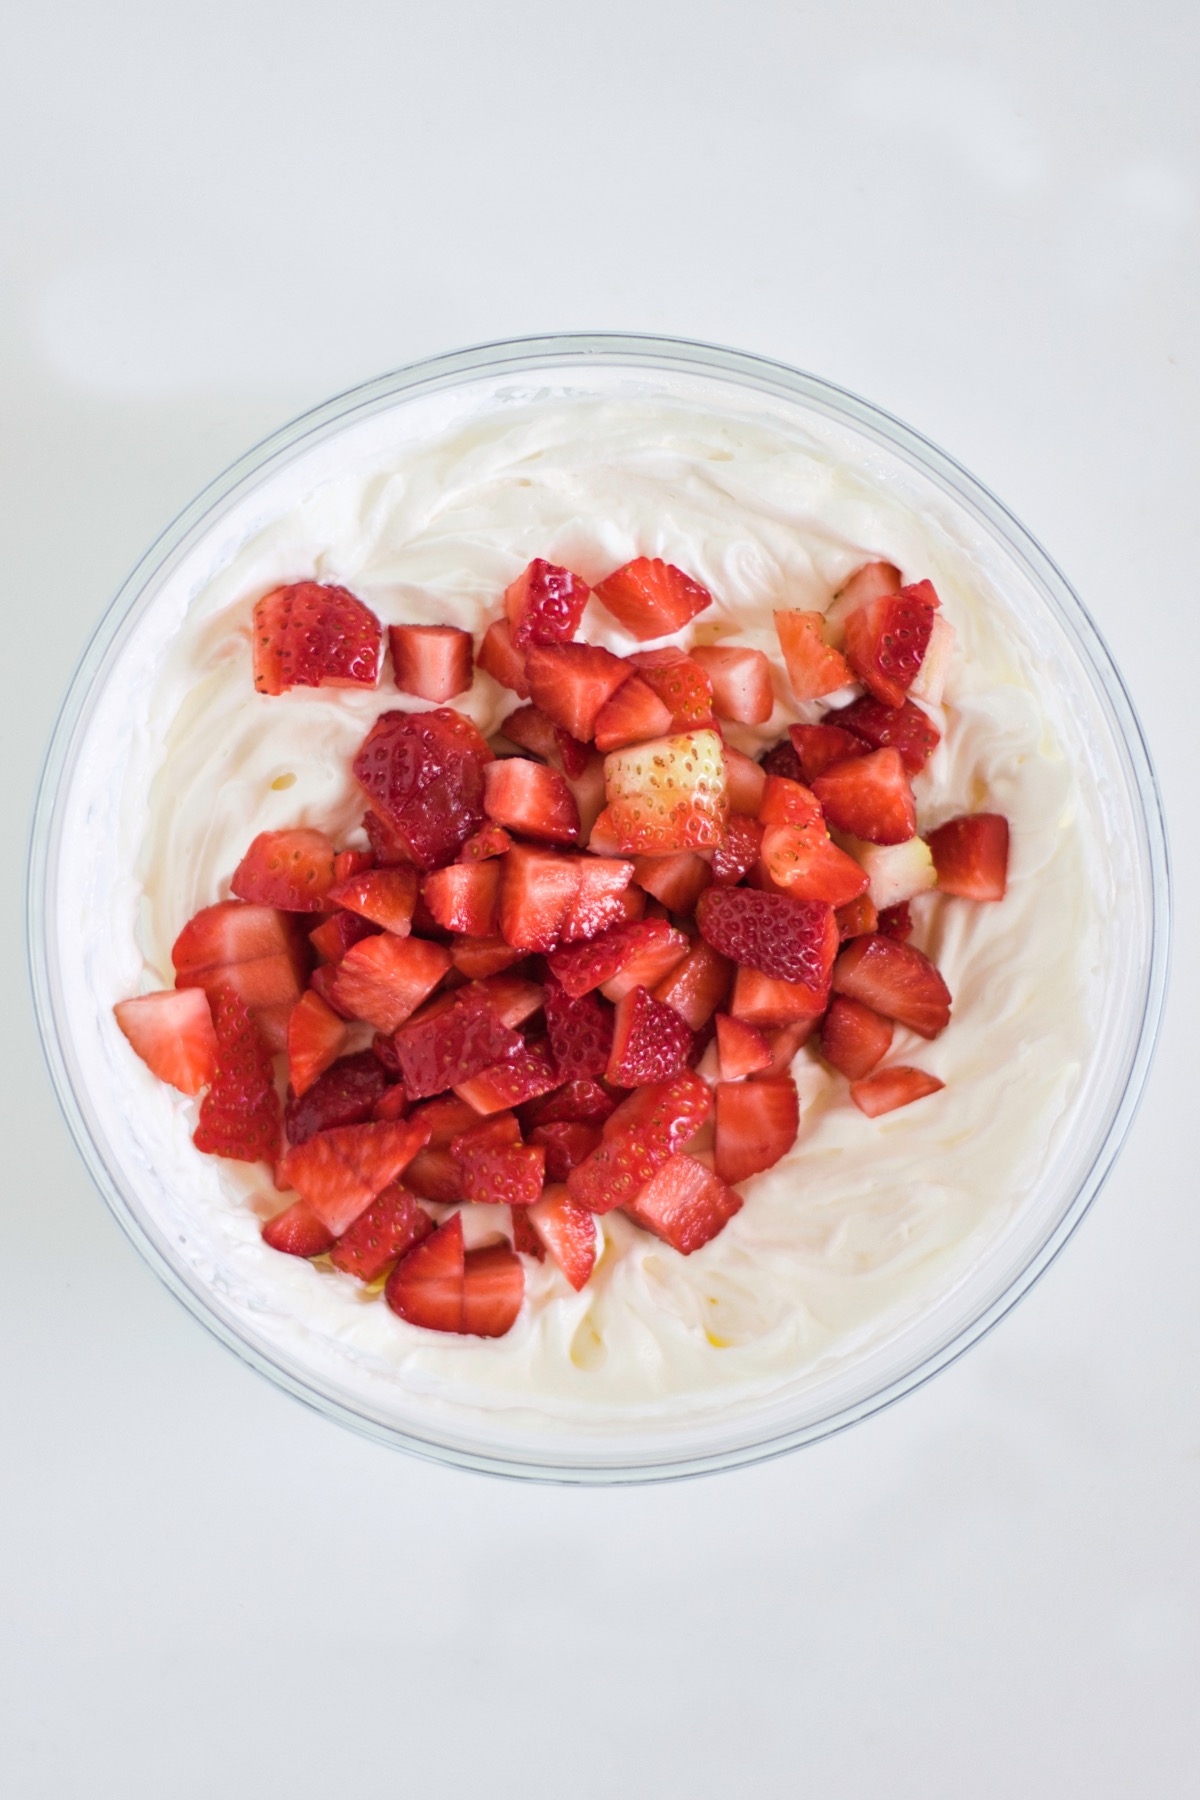 how to mix the strawberries and cream strawberry cream crumble recipe